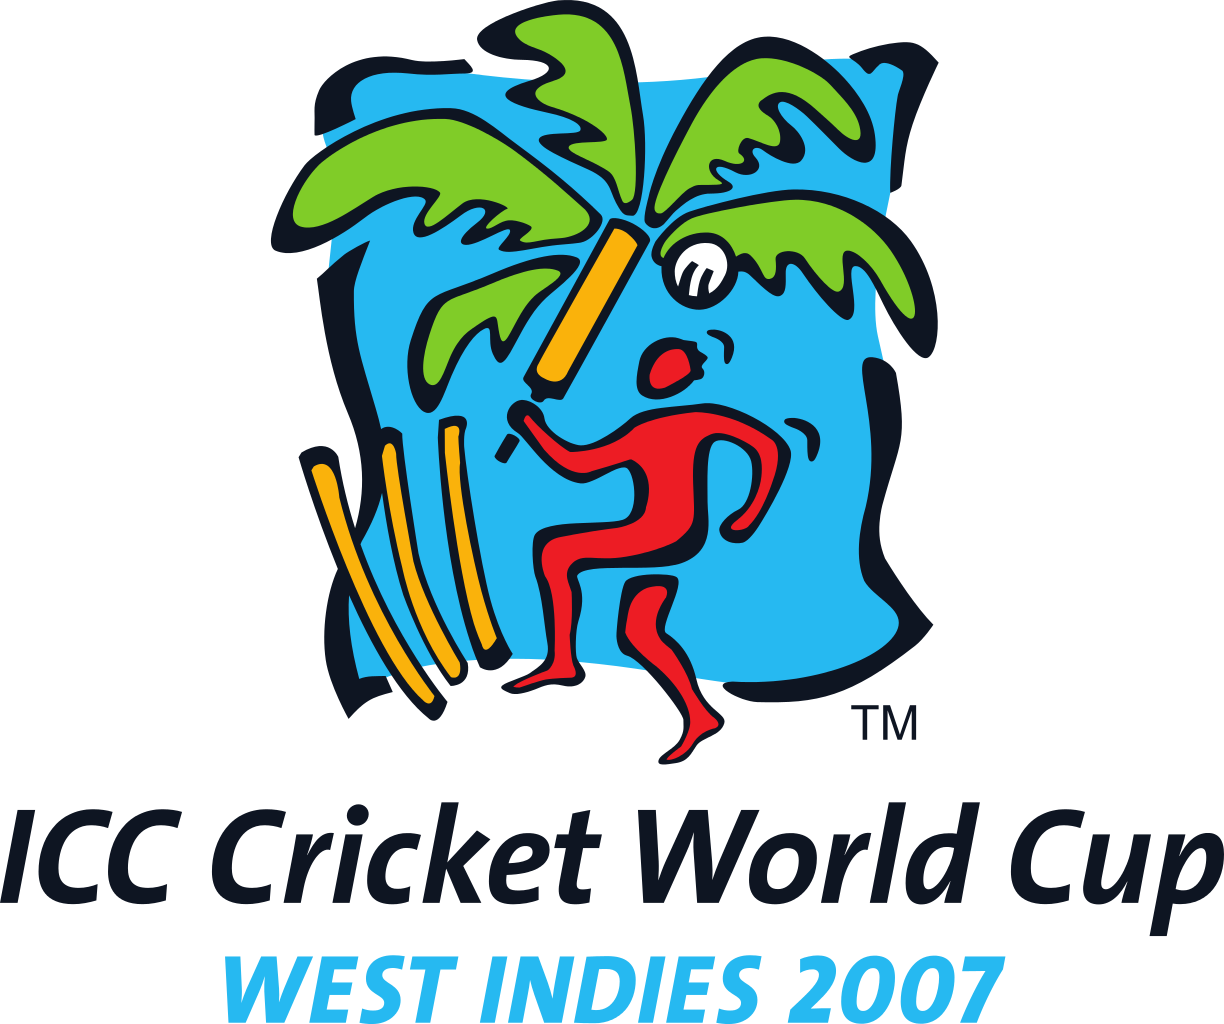 Cricket World Cup West Indies - Icc Cricket World Cup (1224x1024)